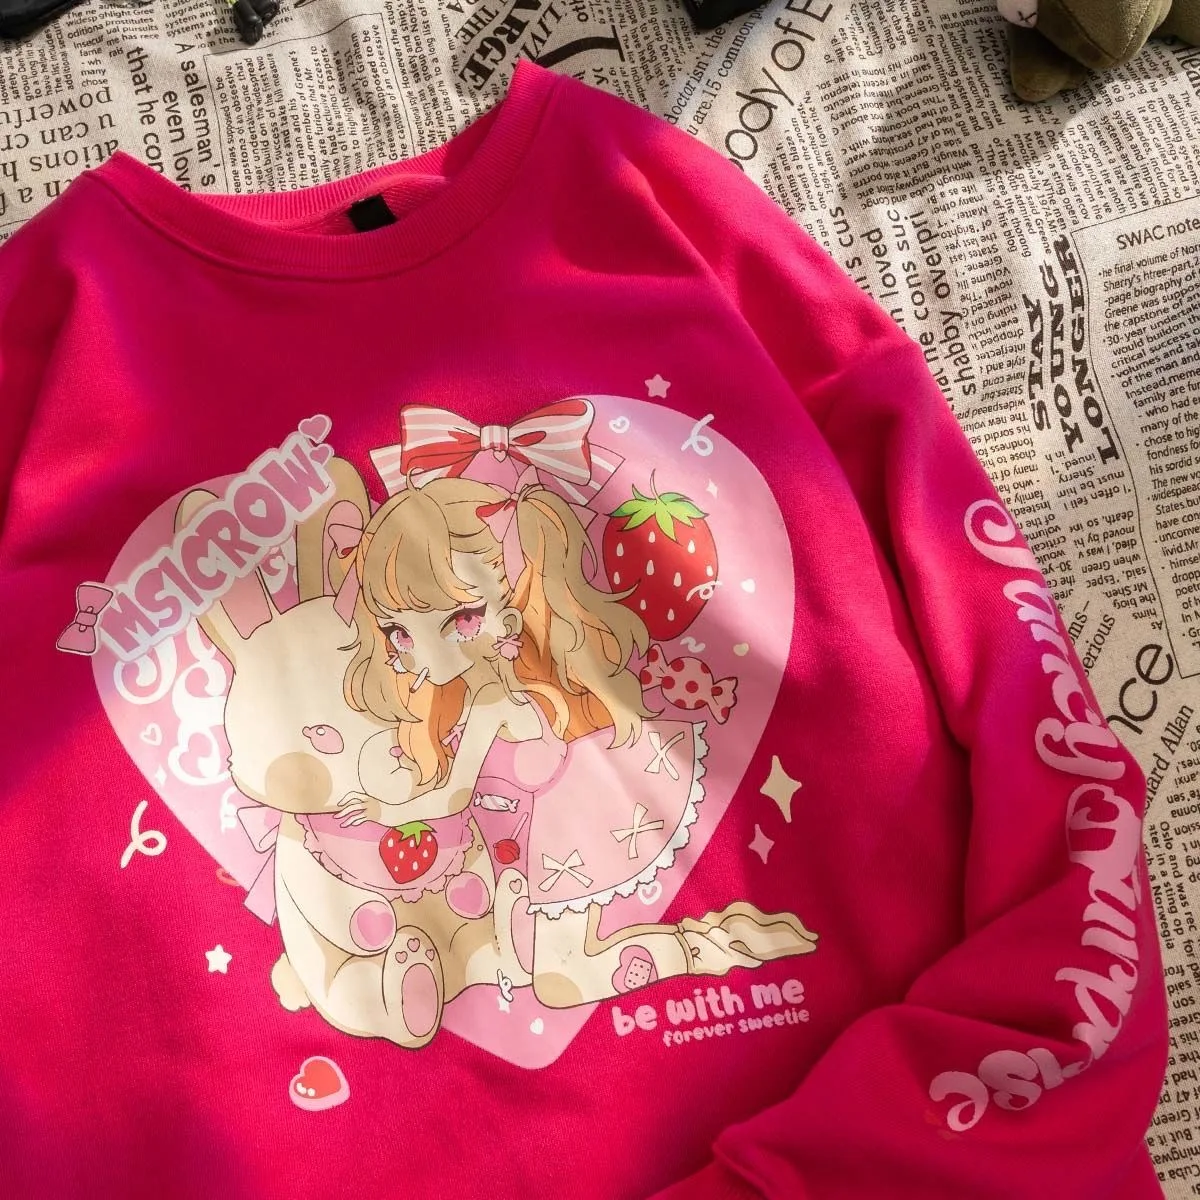 

Rose Red Love Girls Anime Print Sweatshirt Women Japan Fashion Kawaii Clothes for Teens O-Neck Long Sleeve Tops 2021 Fall New